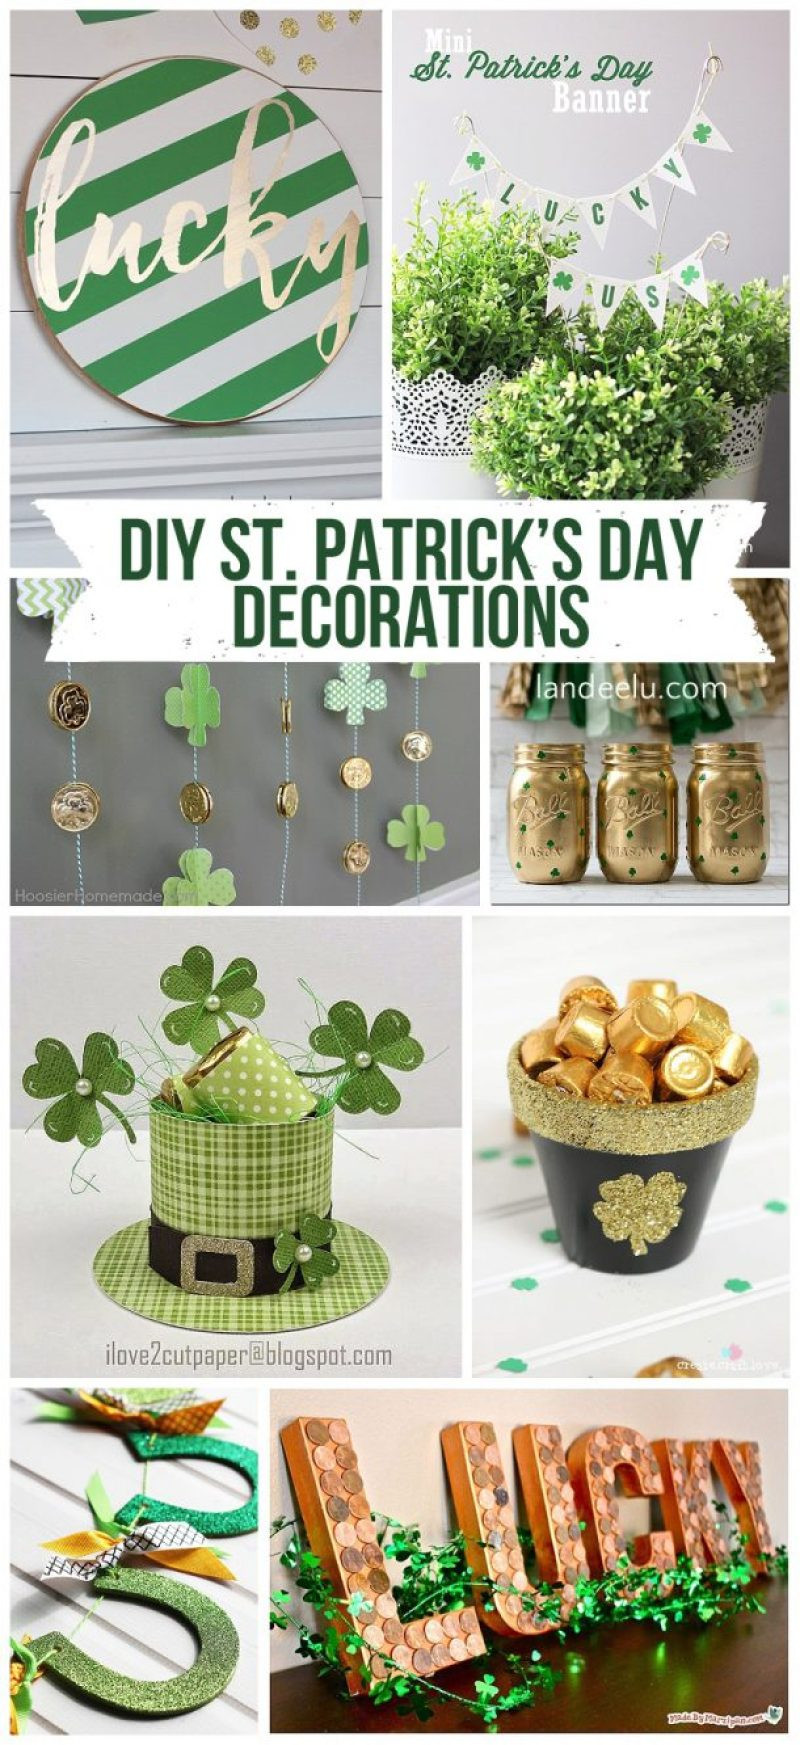 Diy St Patrick's Day Decorations
 DIY St Patrick s Day Decorations landeelu